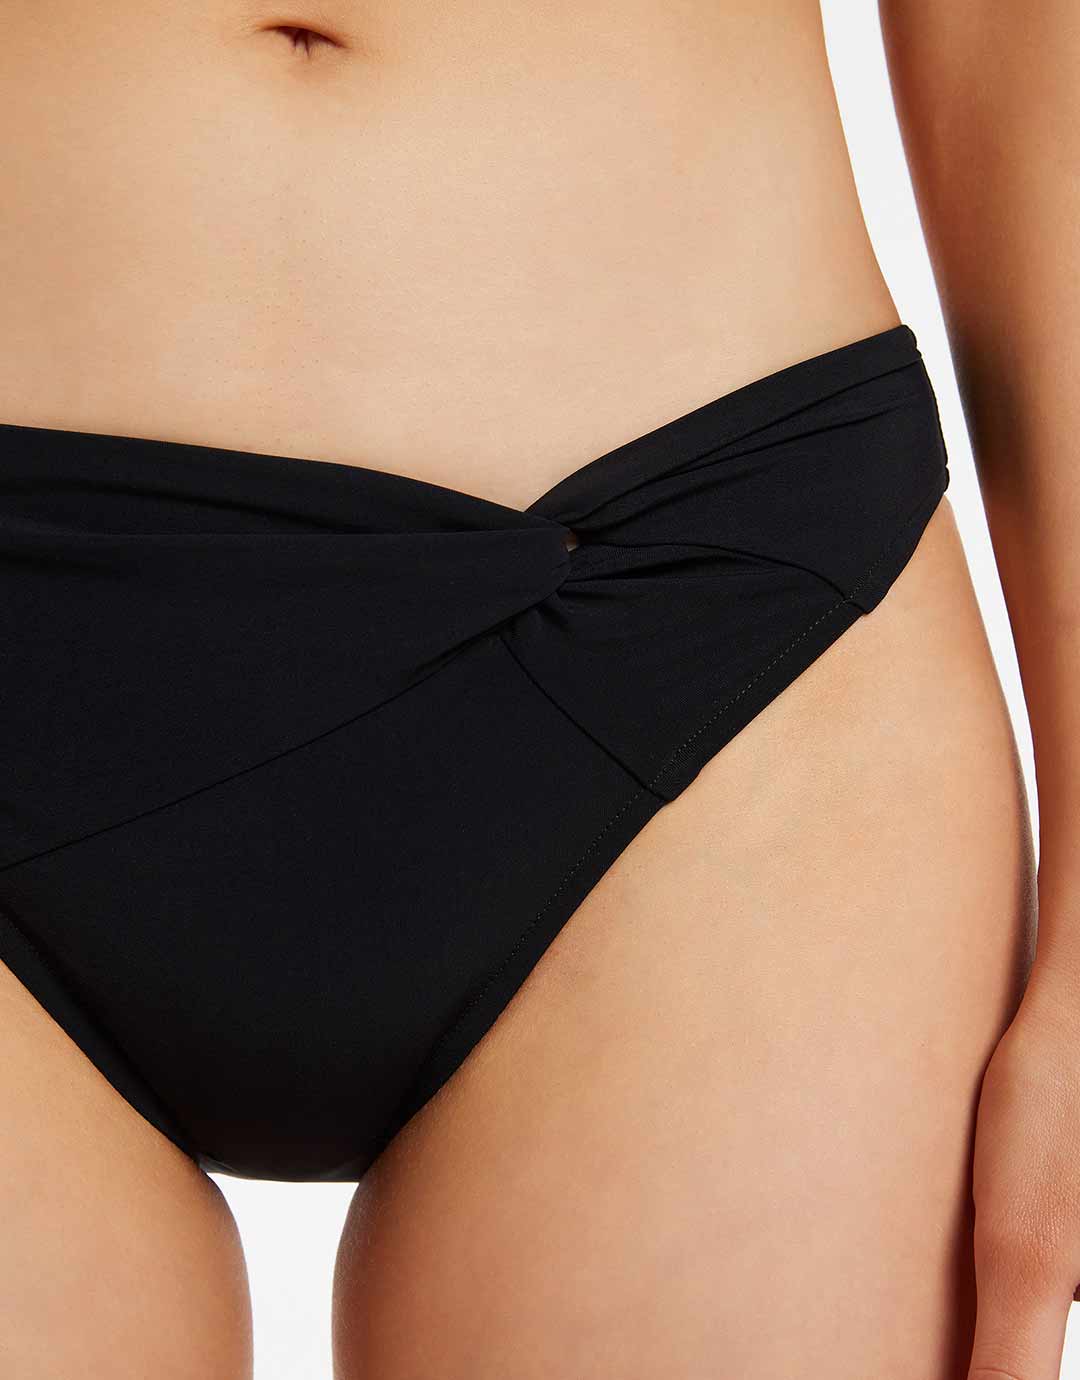 Jetset Twist Front Bikini Pant - Black - Simply Beach UK